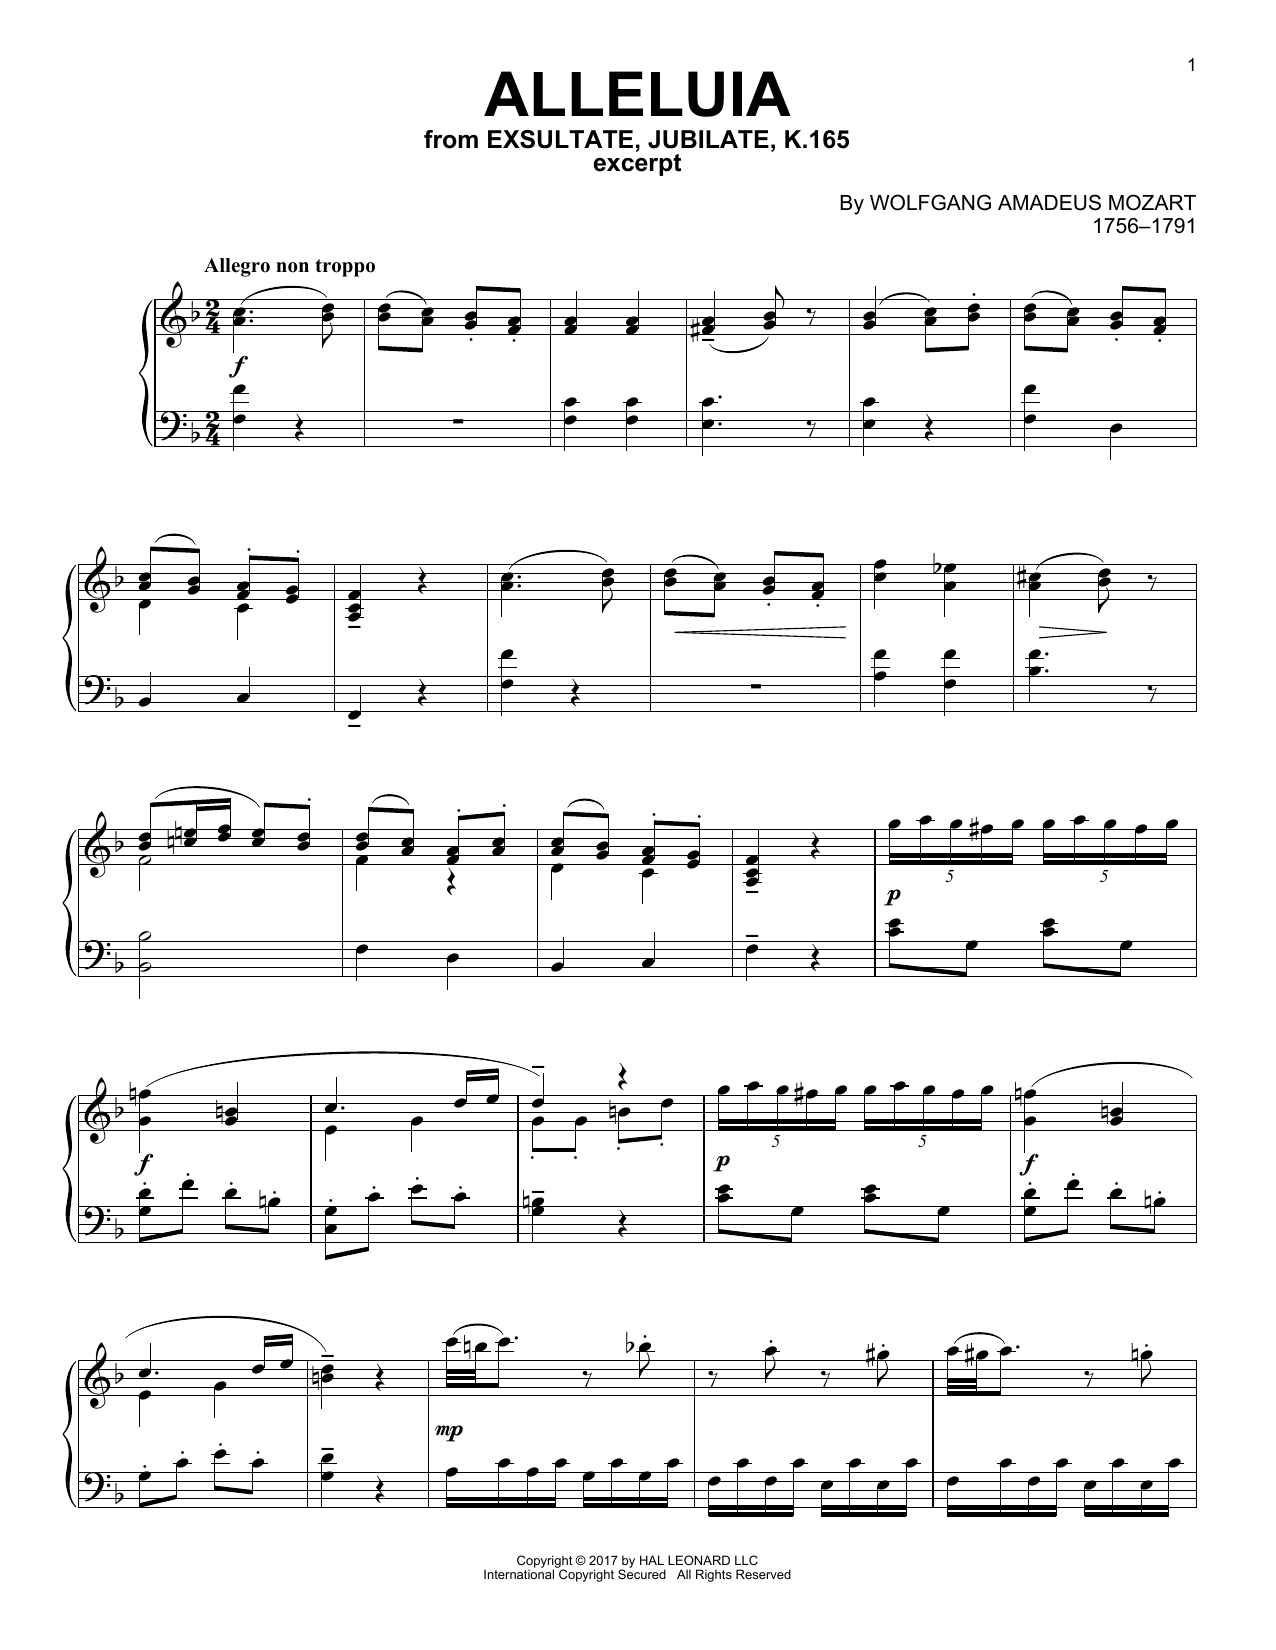 Download Wolfgang Amadeus Mozart Alleluia Sheet Music